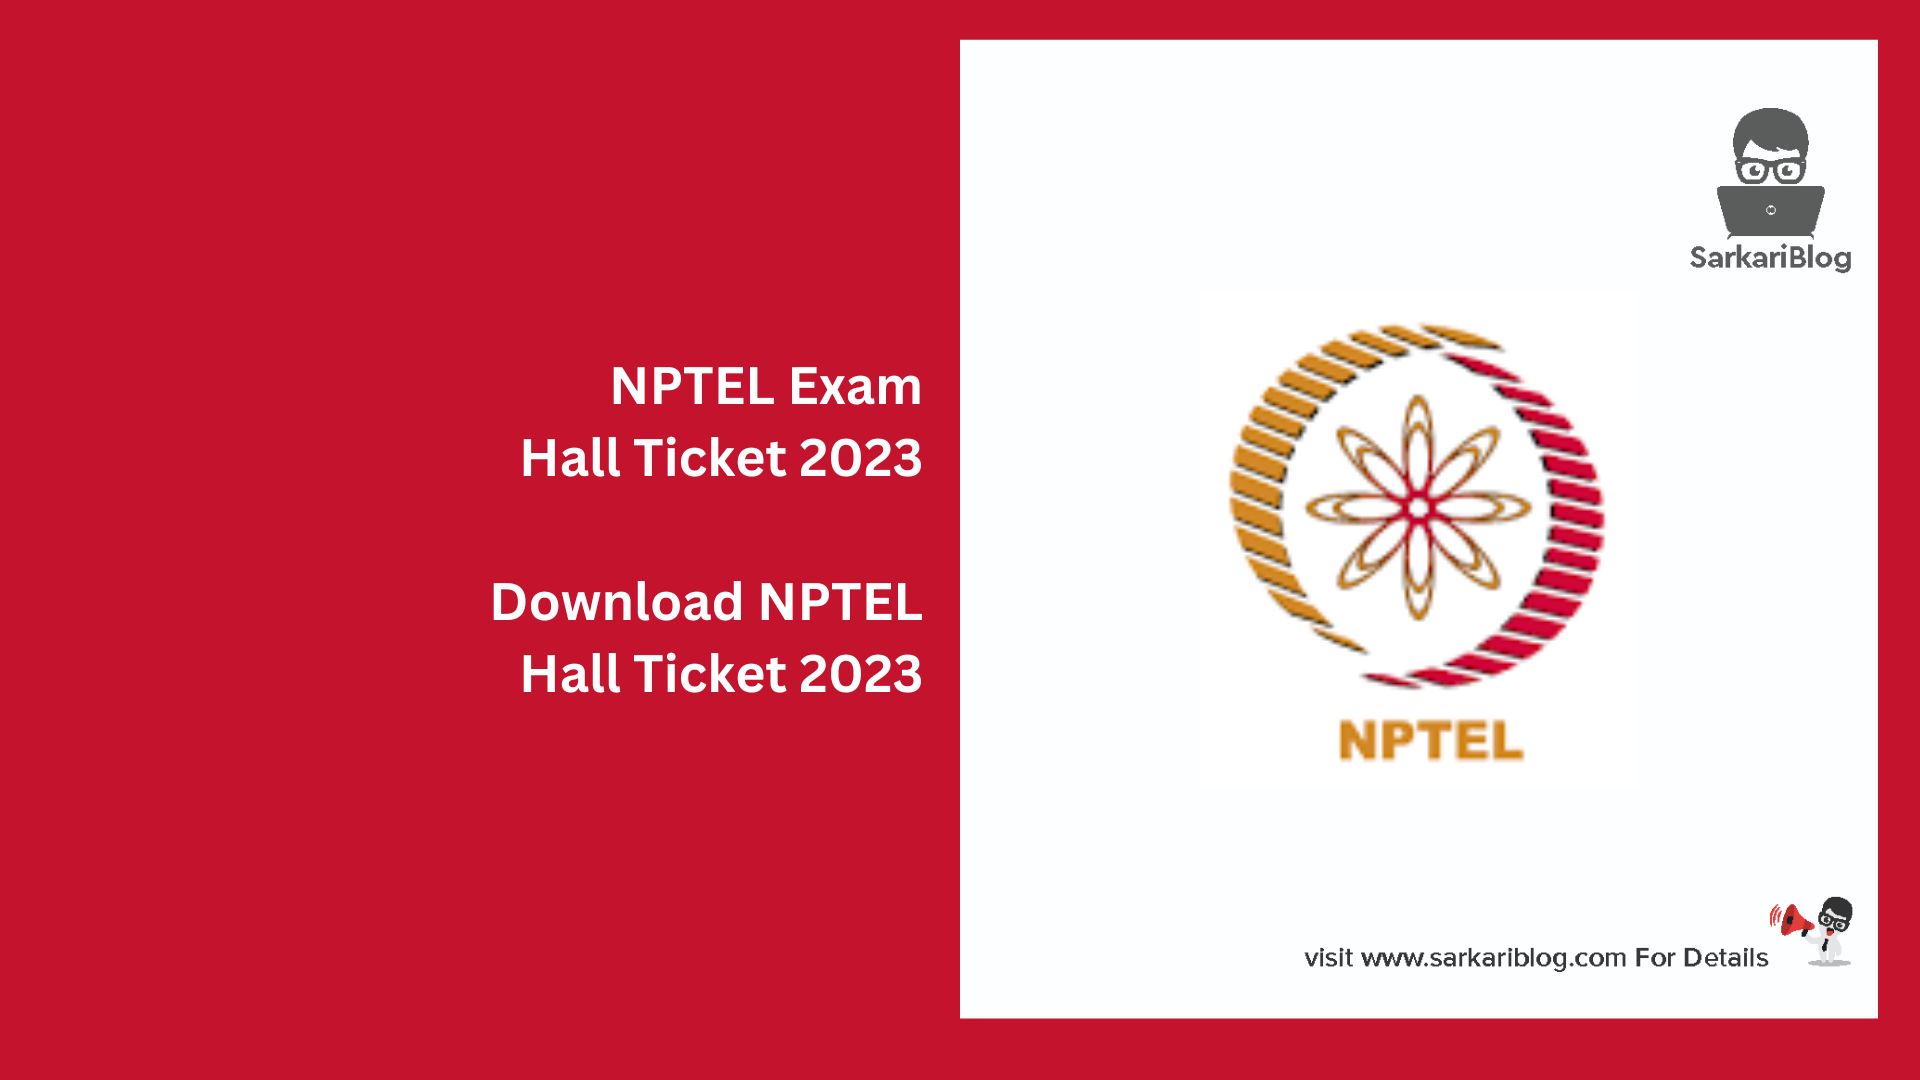 NPTEL Exam Hall Ticket 2023